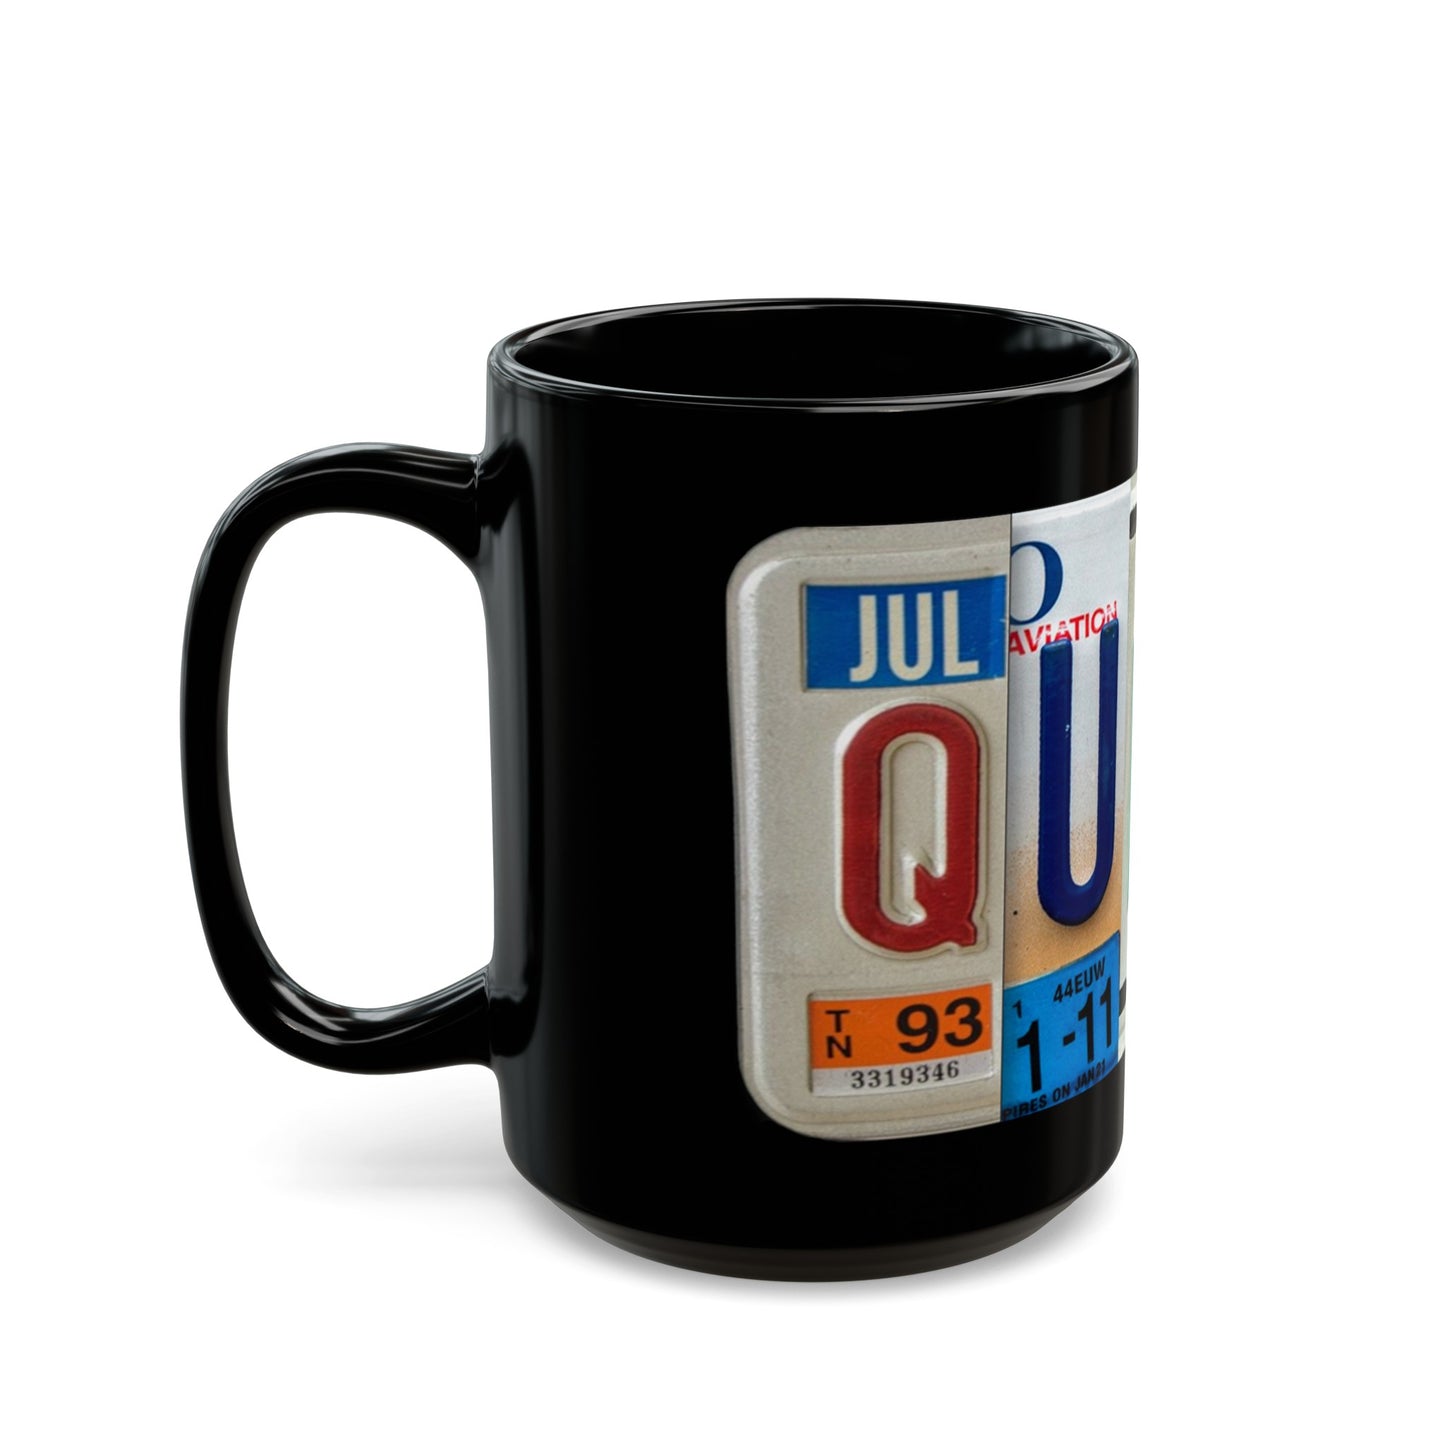 Regal 'Queen' Black Ceramic Mug - 15oz Coffee Cup for Royalty